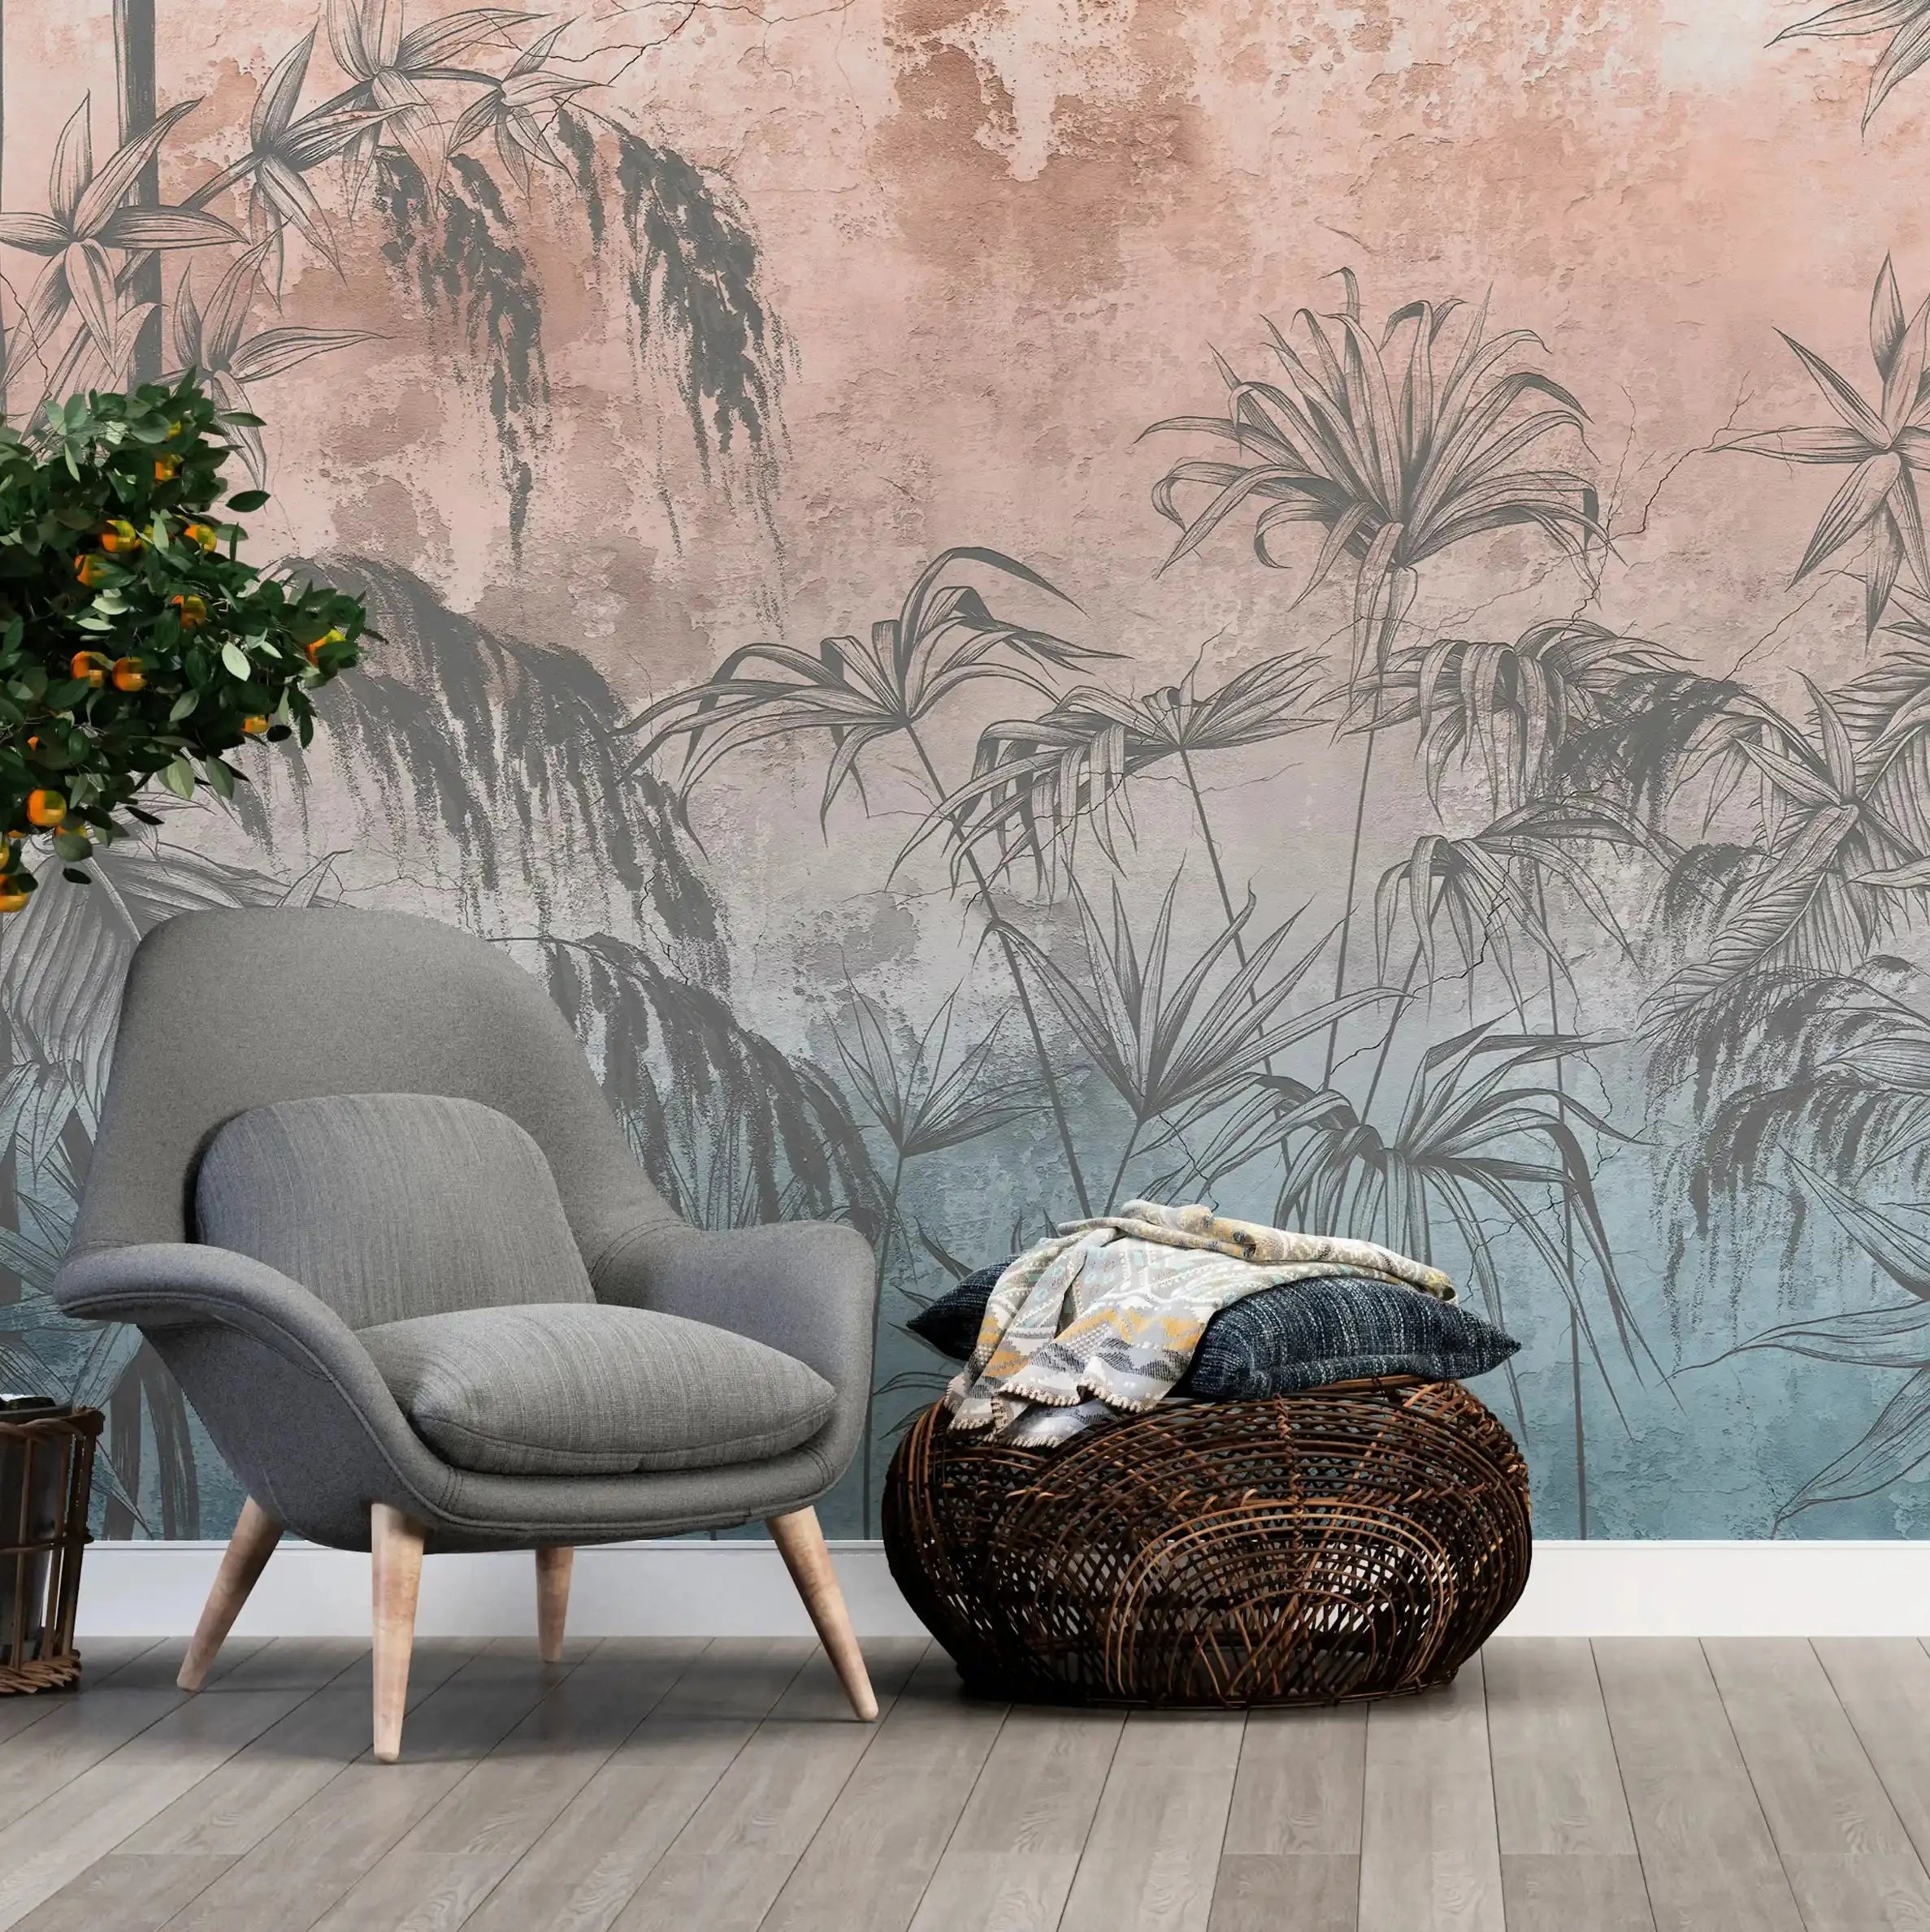 3001-D / Botanical Peel and Stick Wallpaper - Wild Floral, Tropical Leaf Wall Mural, Self Adhesive & Removable Design for Room, Shelf, Drawer Liner - Artevella